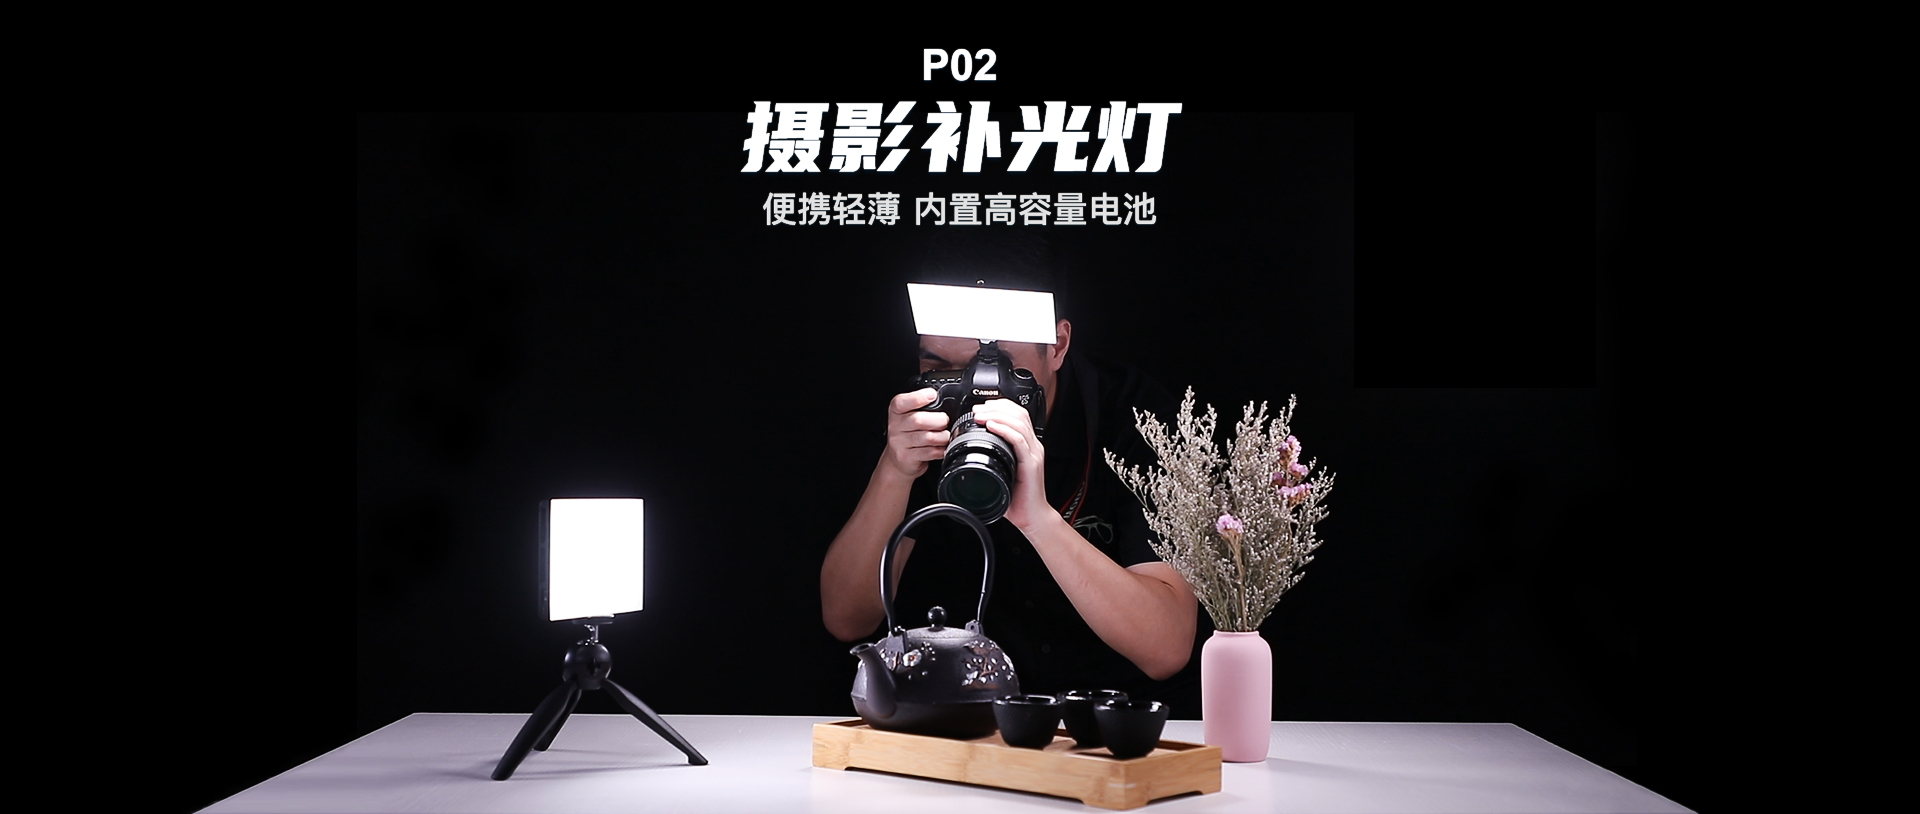 P02-LED摄影补光灯